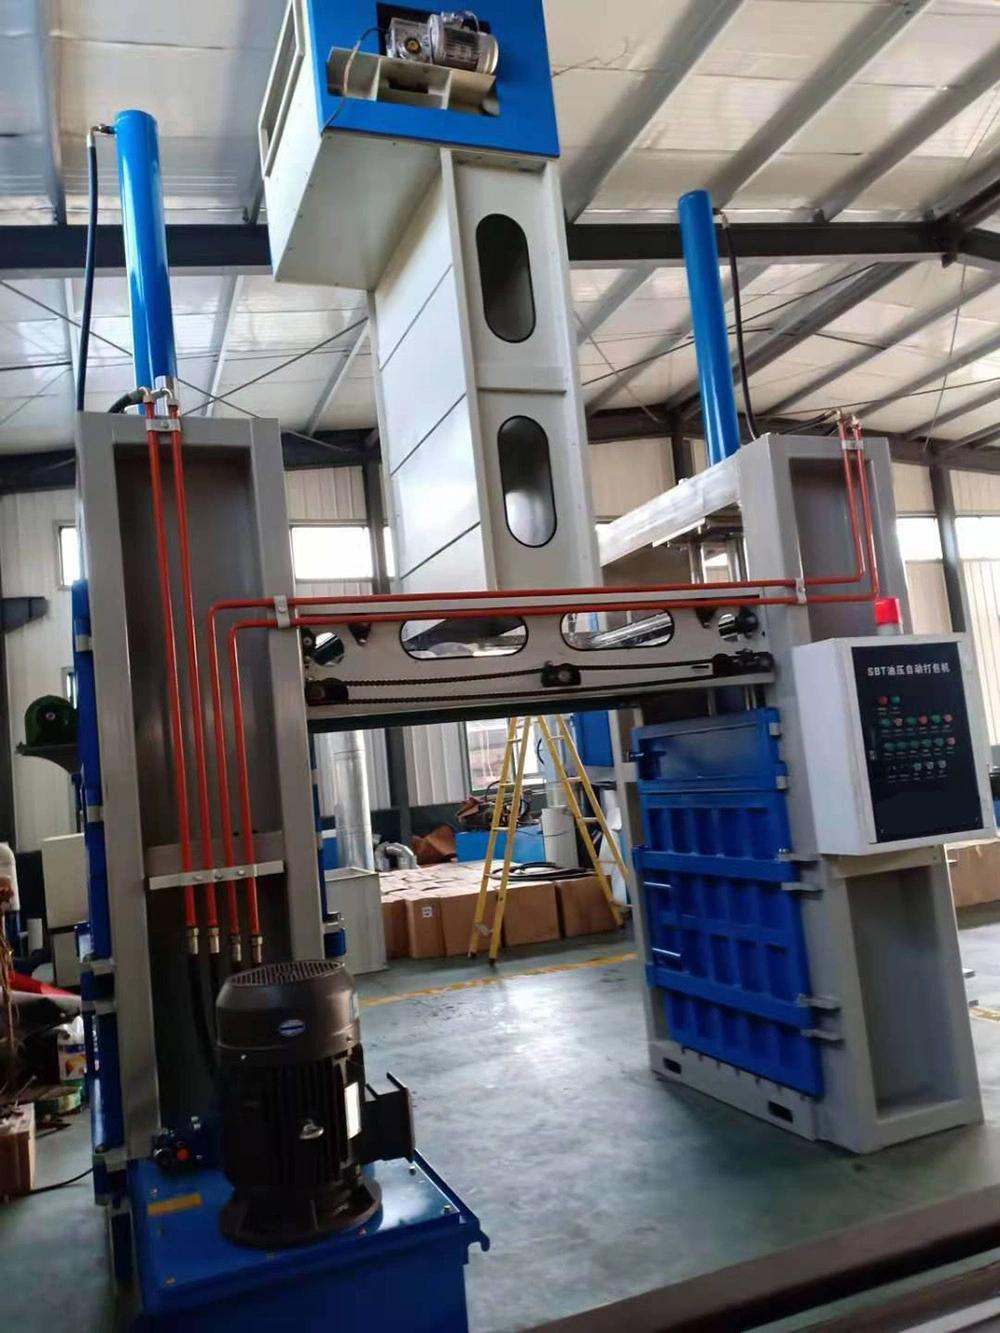 Vertical Hydraulic Cloth Baling Press Machine